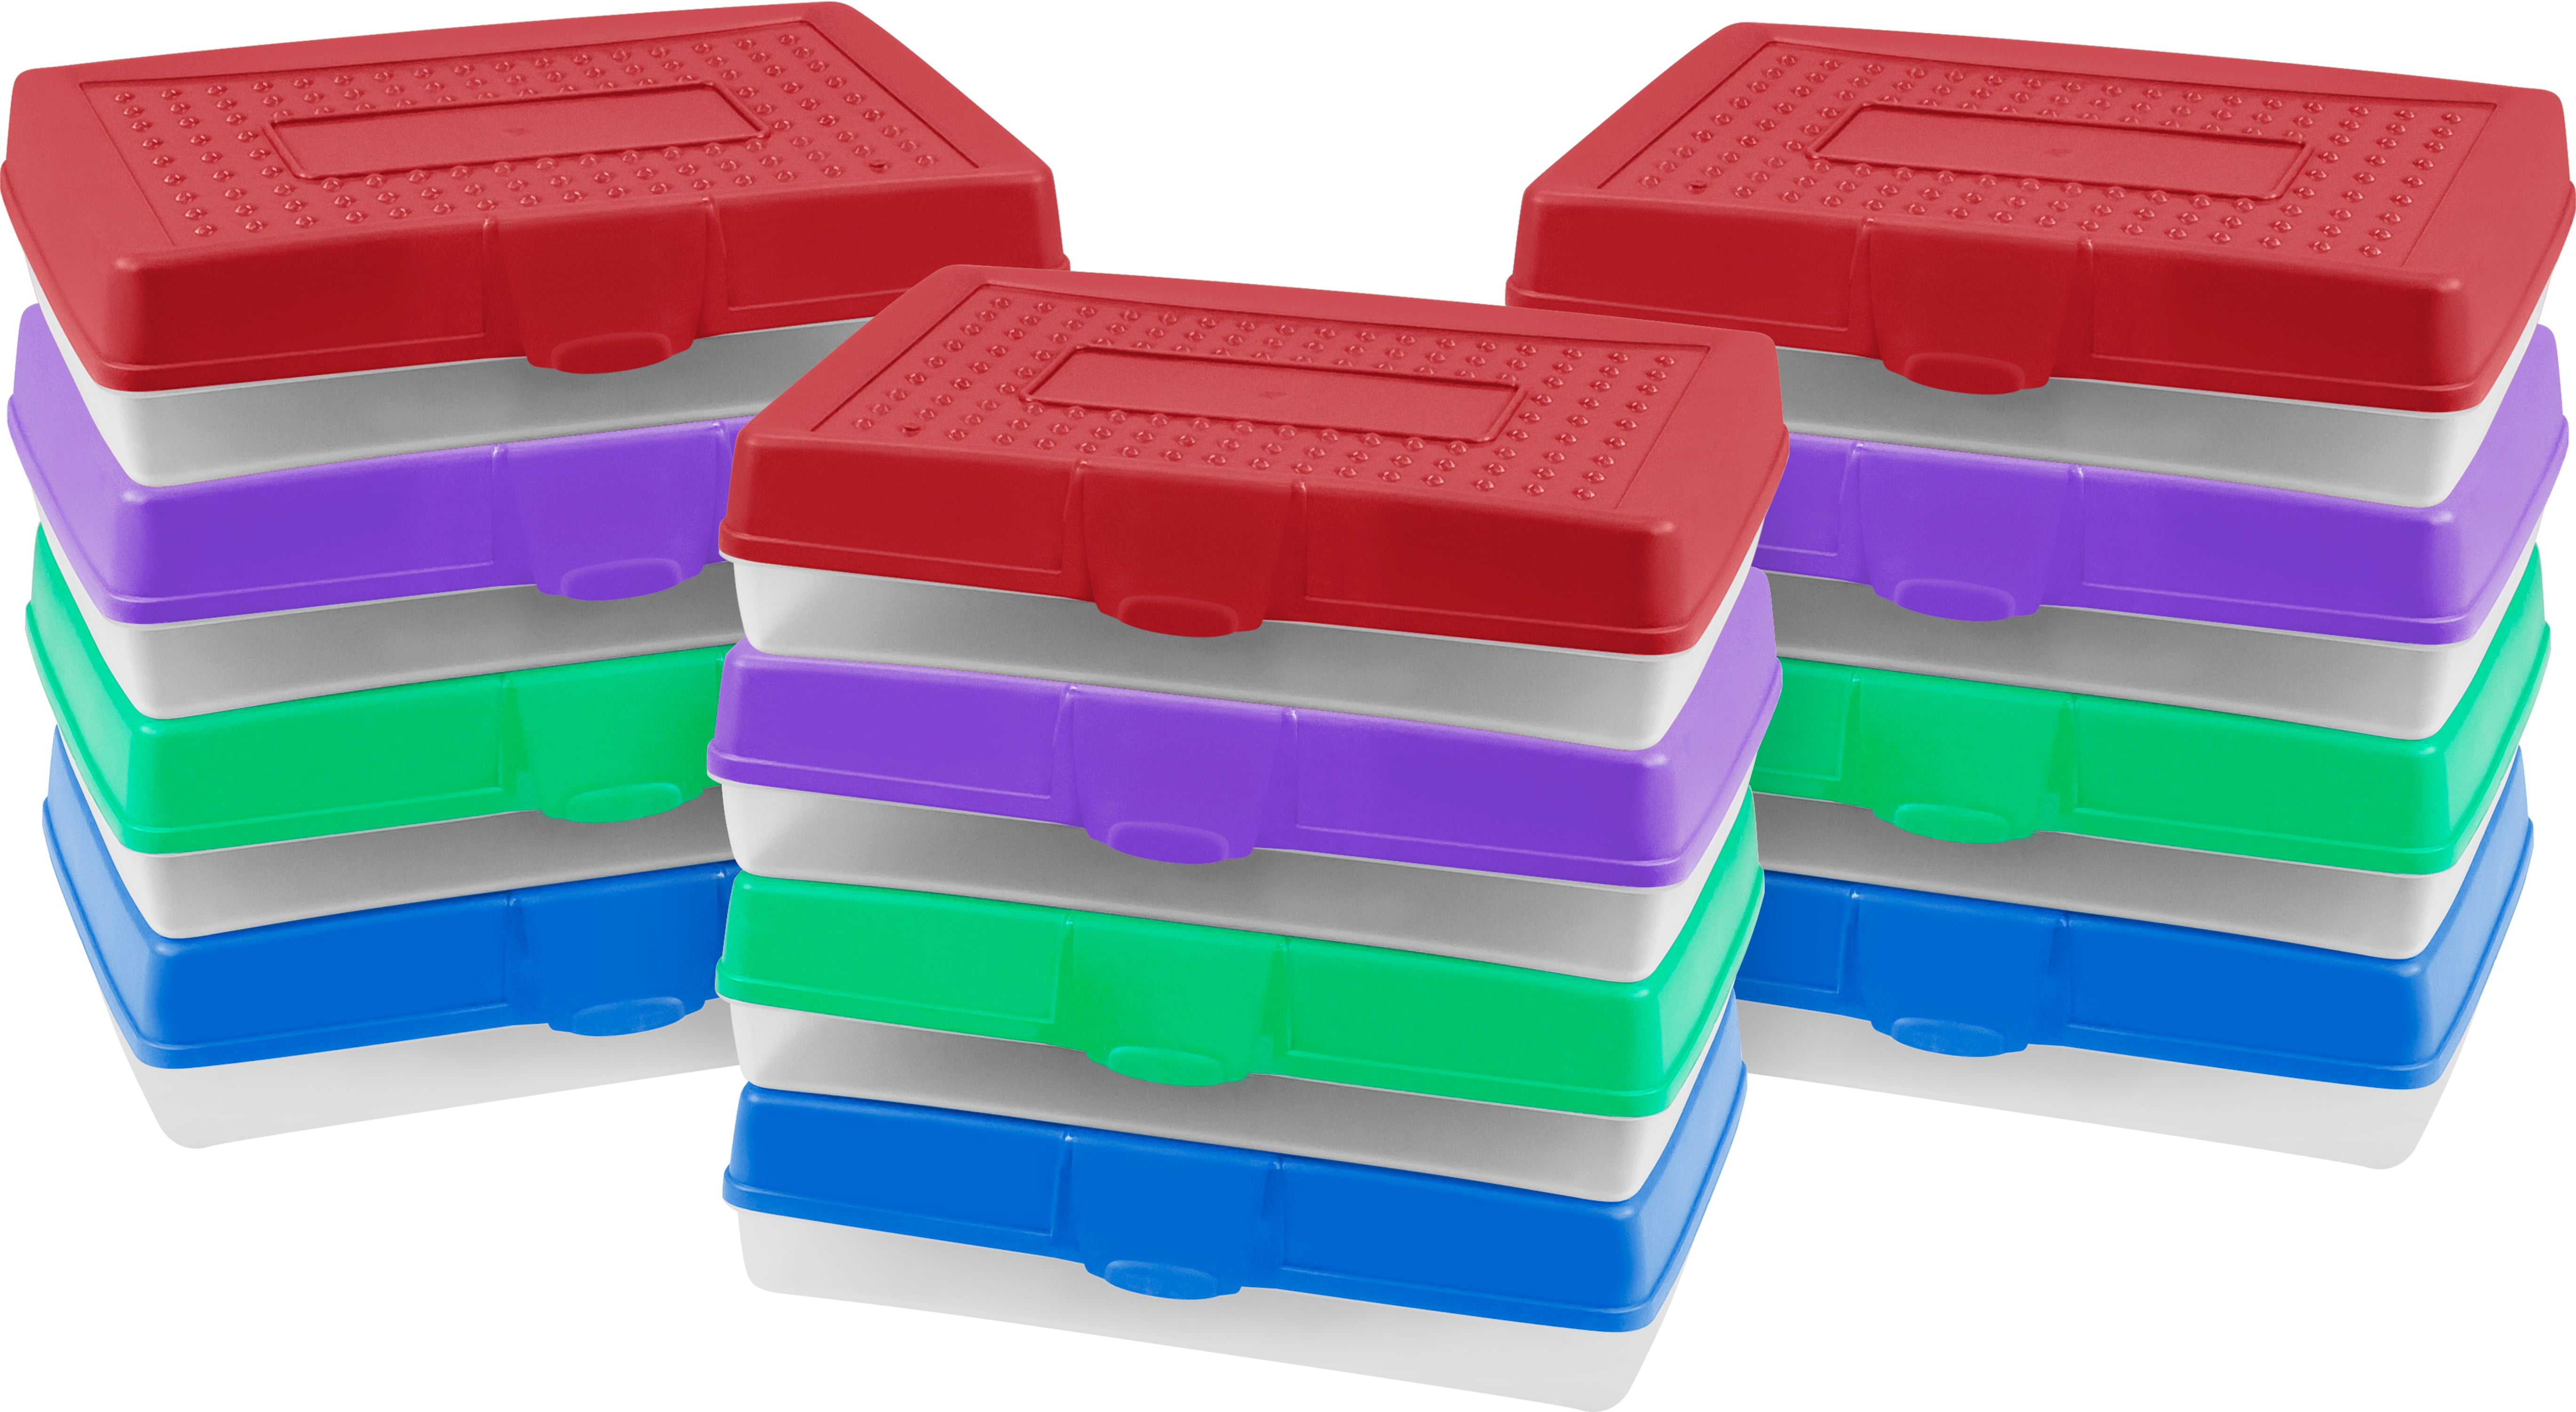 6-Pack 7.75 x 2.9 x 11.25 Inches Plastic School Supply Storage Organizer Assorted Colors 61645U06C Storex Large Pencil Box Case 